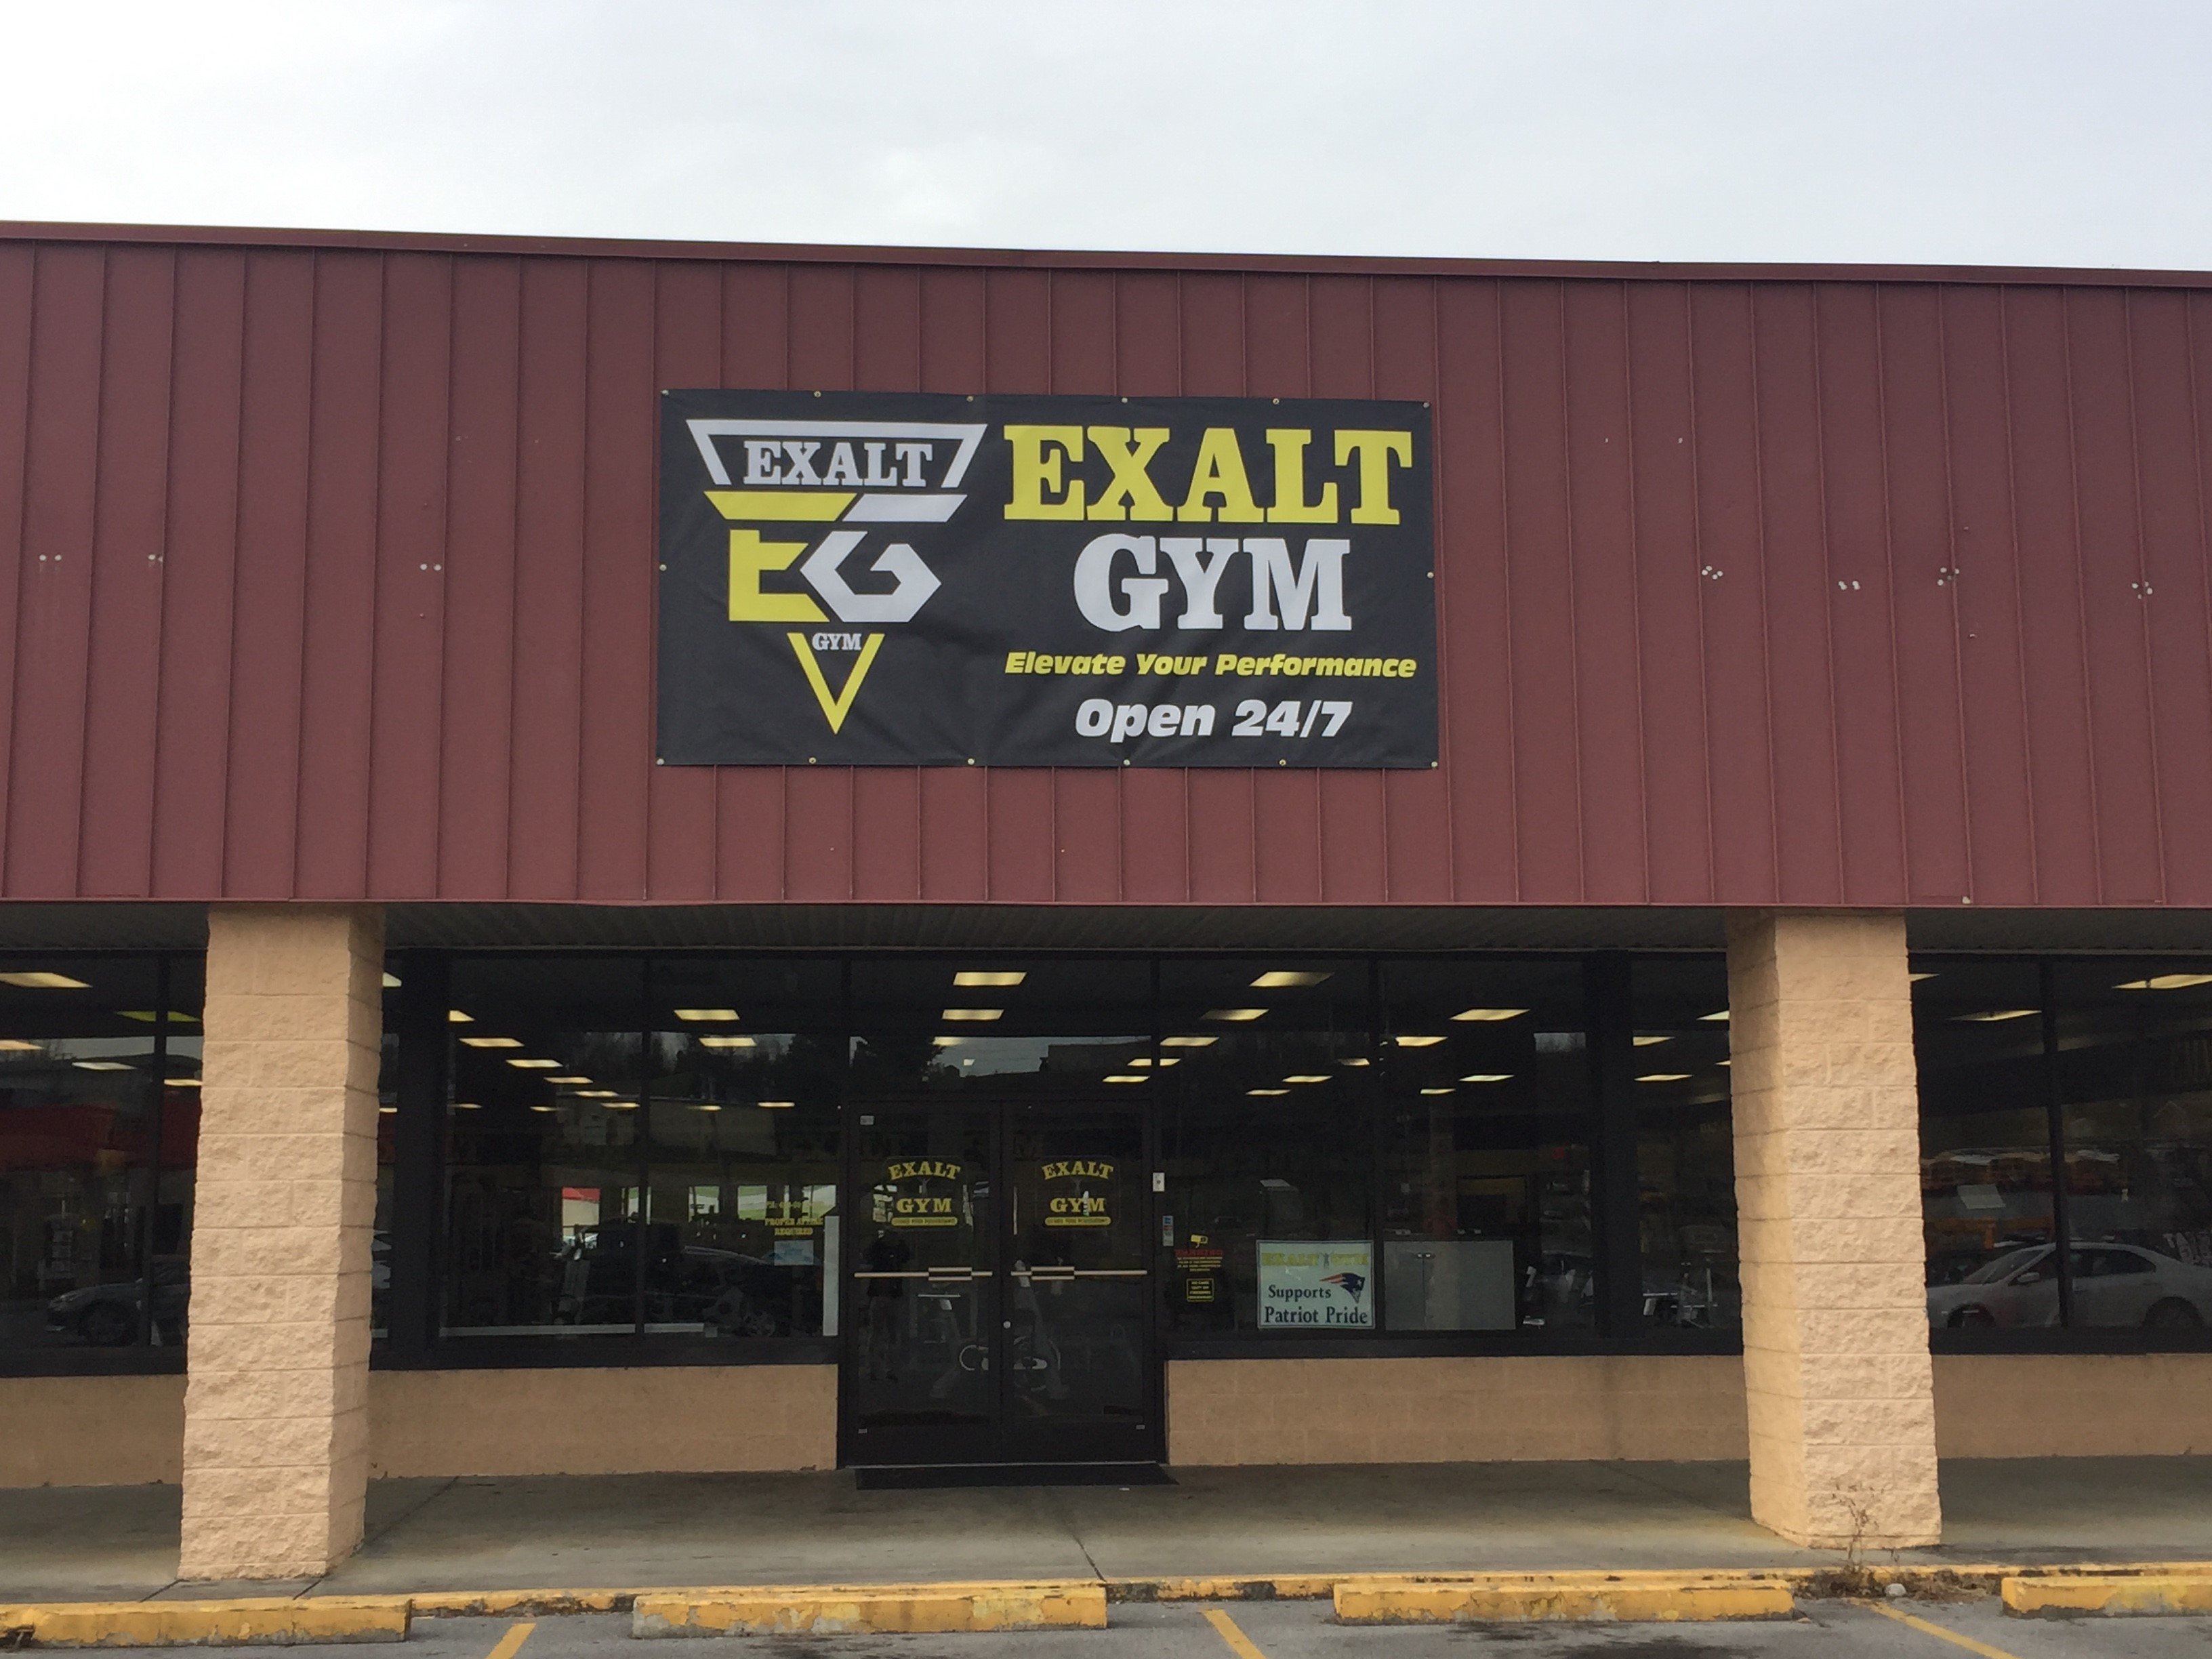 Exalt Gym outdoor banner